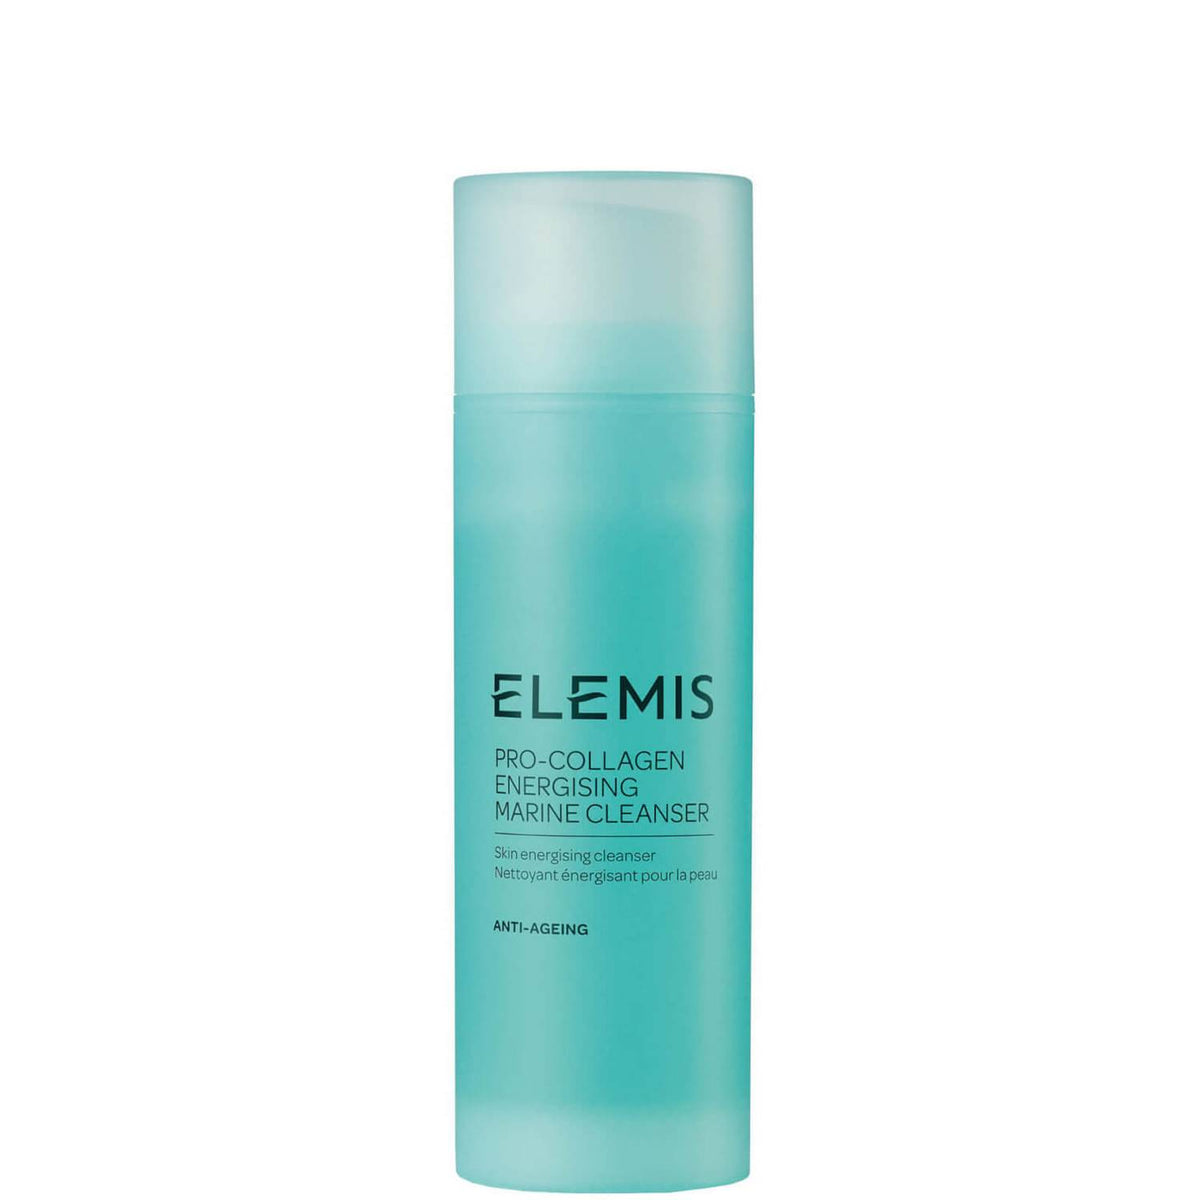 Elemis Pro-Collagen Energising Marine Cleanser facial cleanser 150ml 